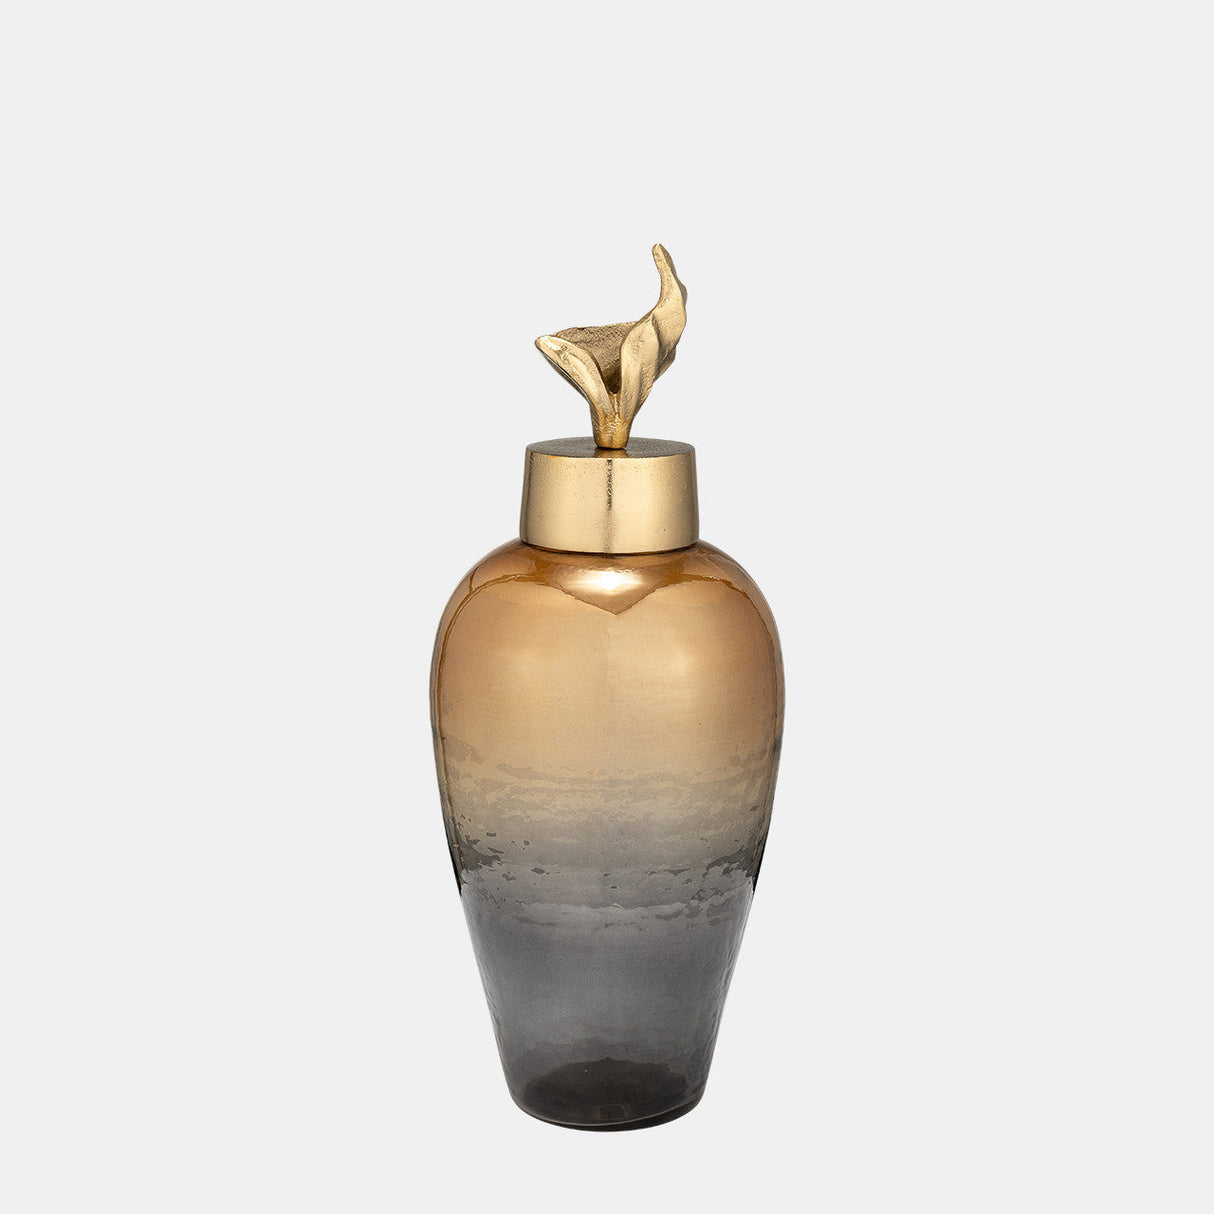 17"h Metal Vase W/ Lily Lid, Bronze